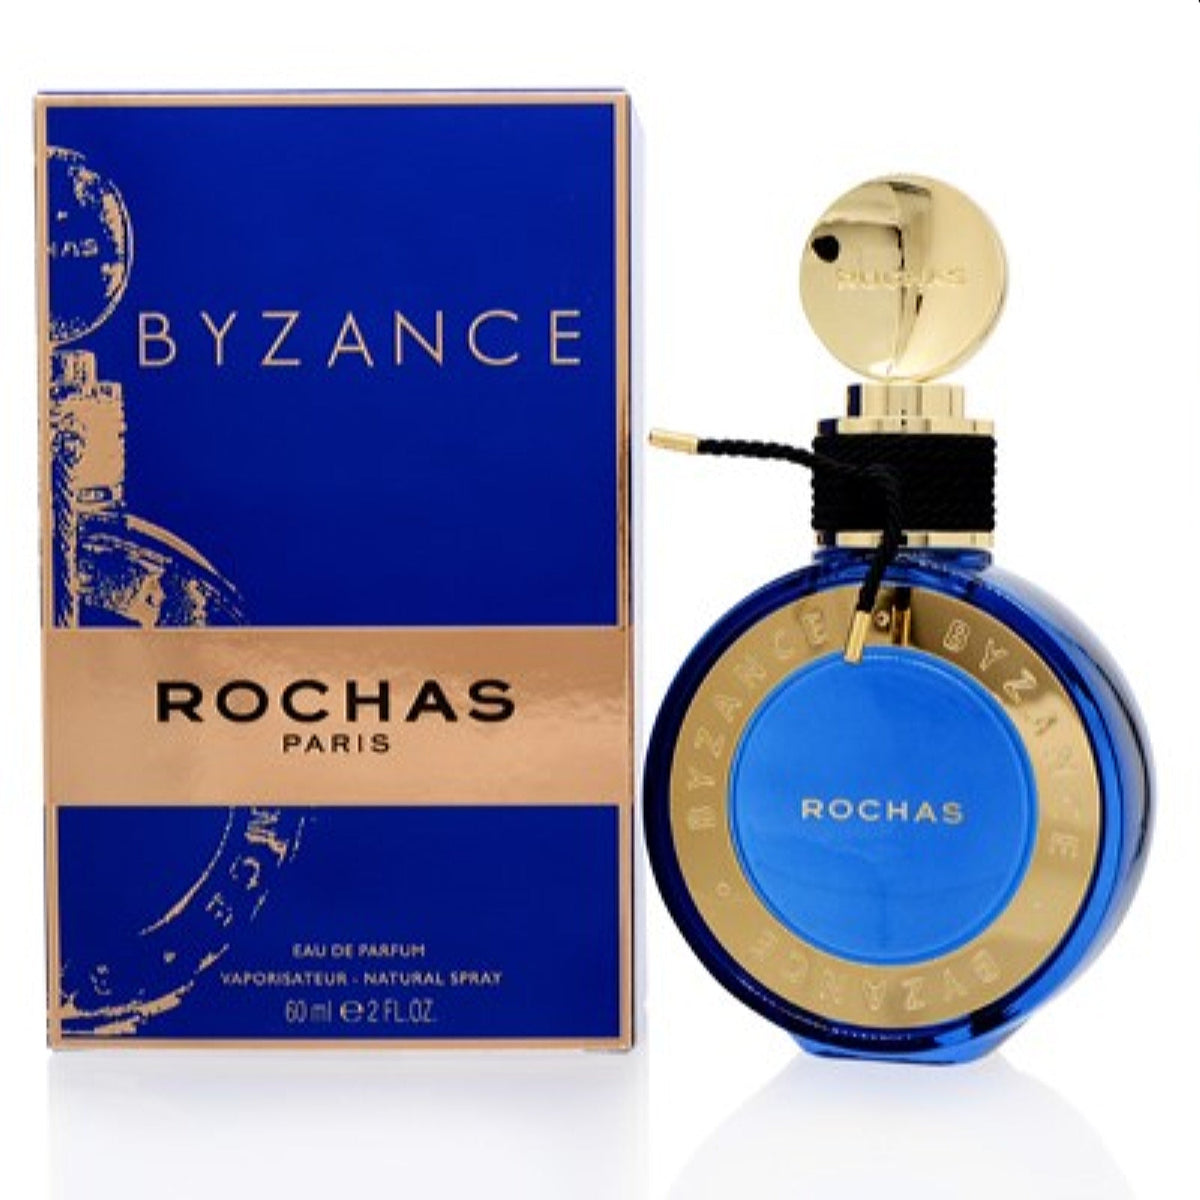 Byzance Rochas Edp Spray 2.0 Oz (60 Ml) For Women  RC020A02